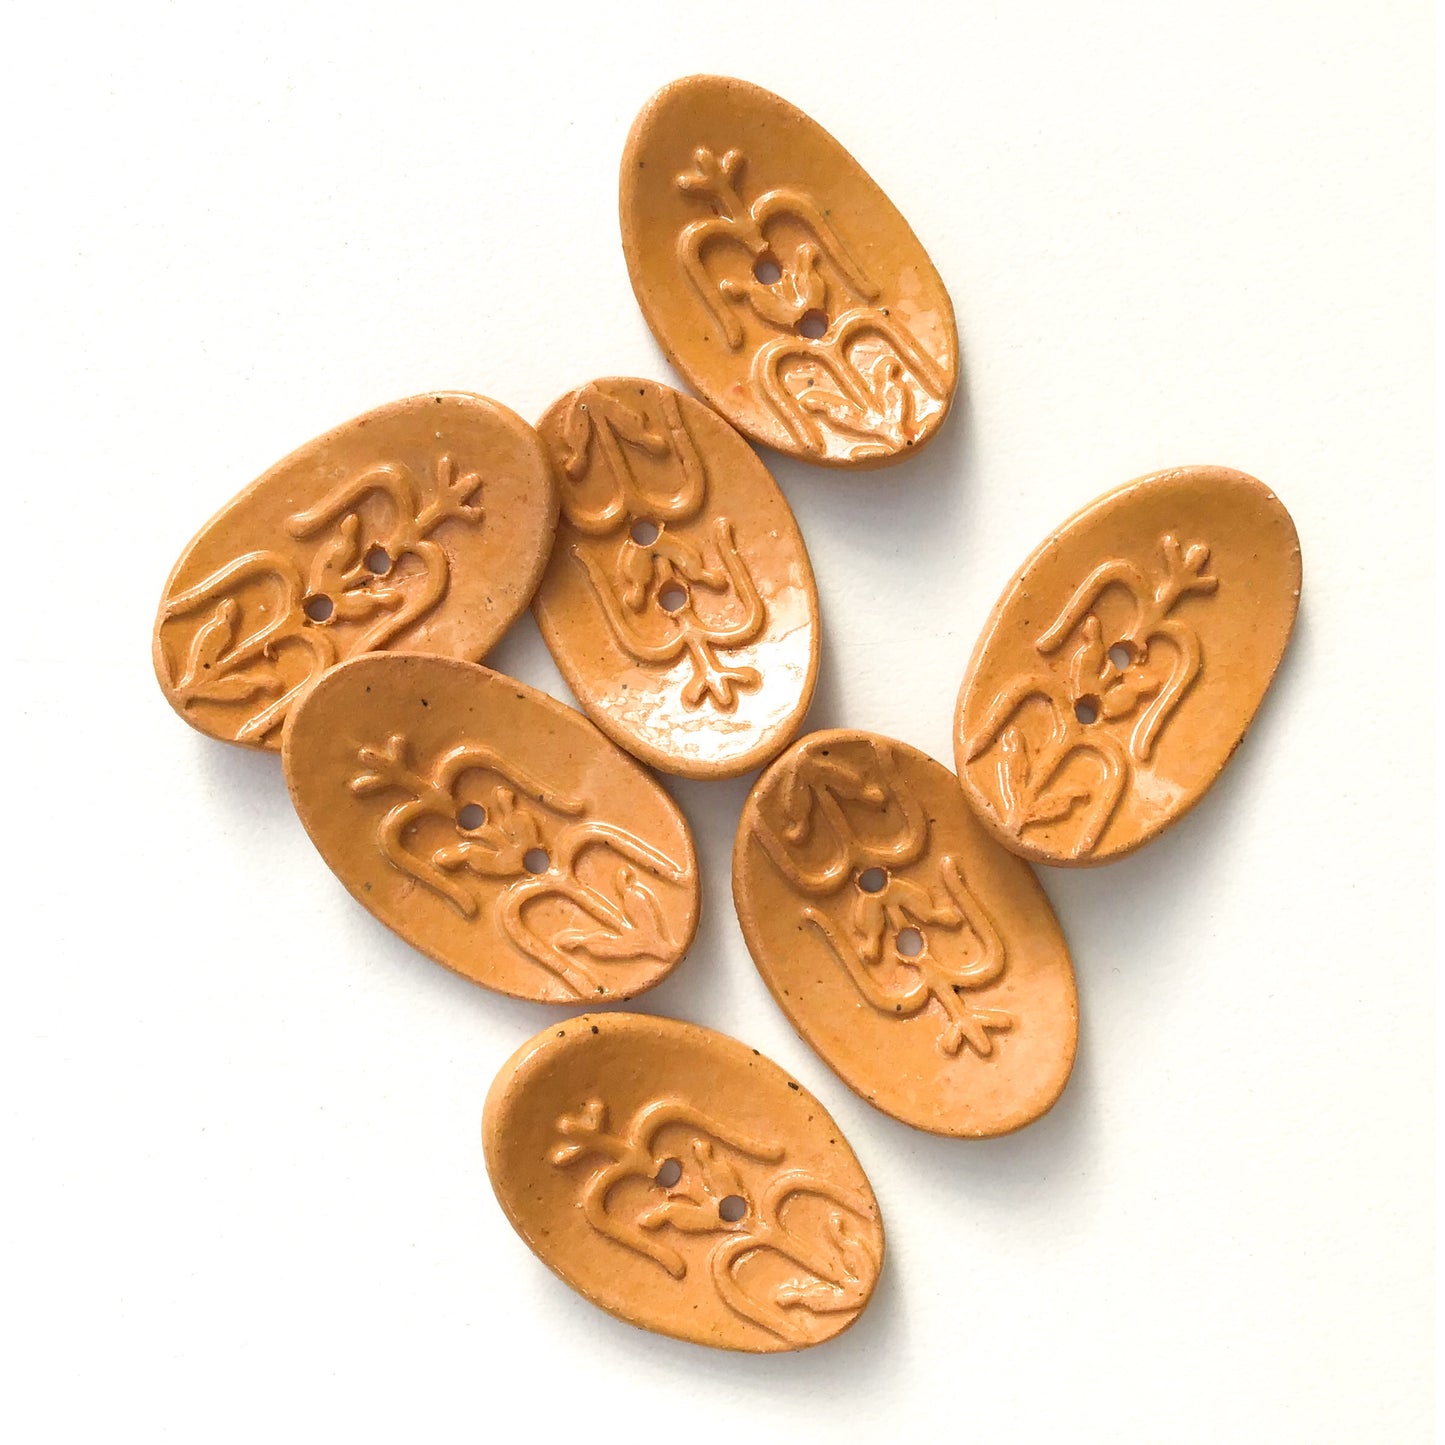 Southwestern Corn Buttons - Golden-Brown Ceramic Buttons - 3/4" x 1 1/8" - 7 Pack